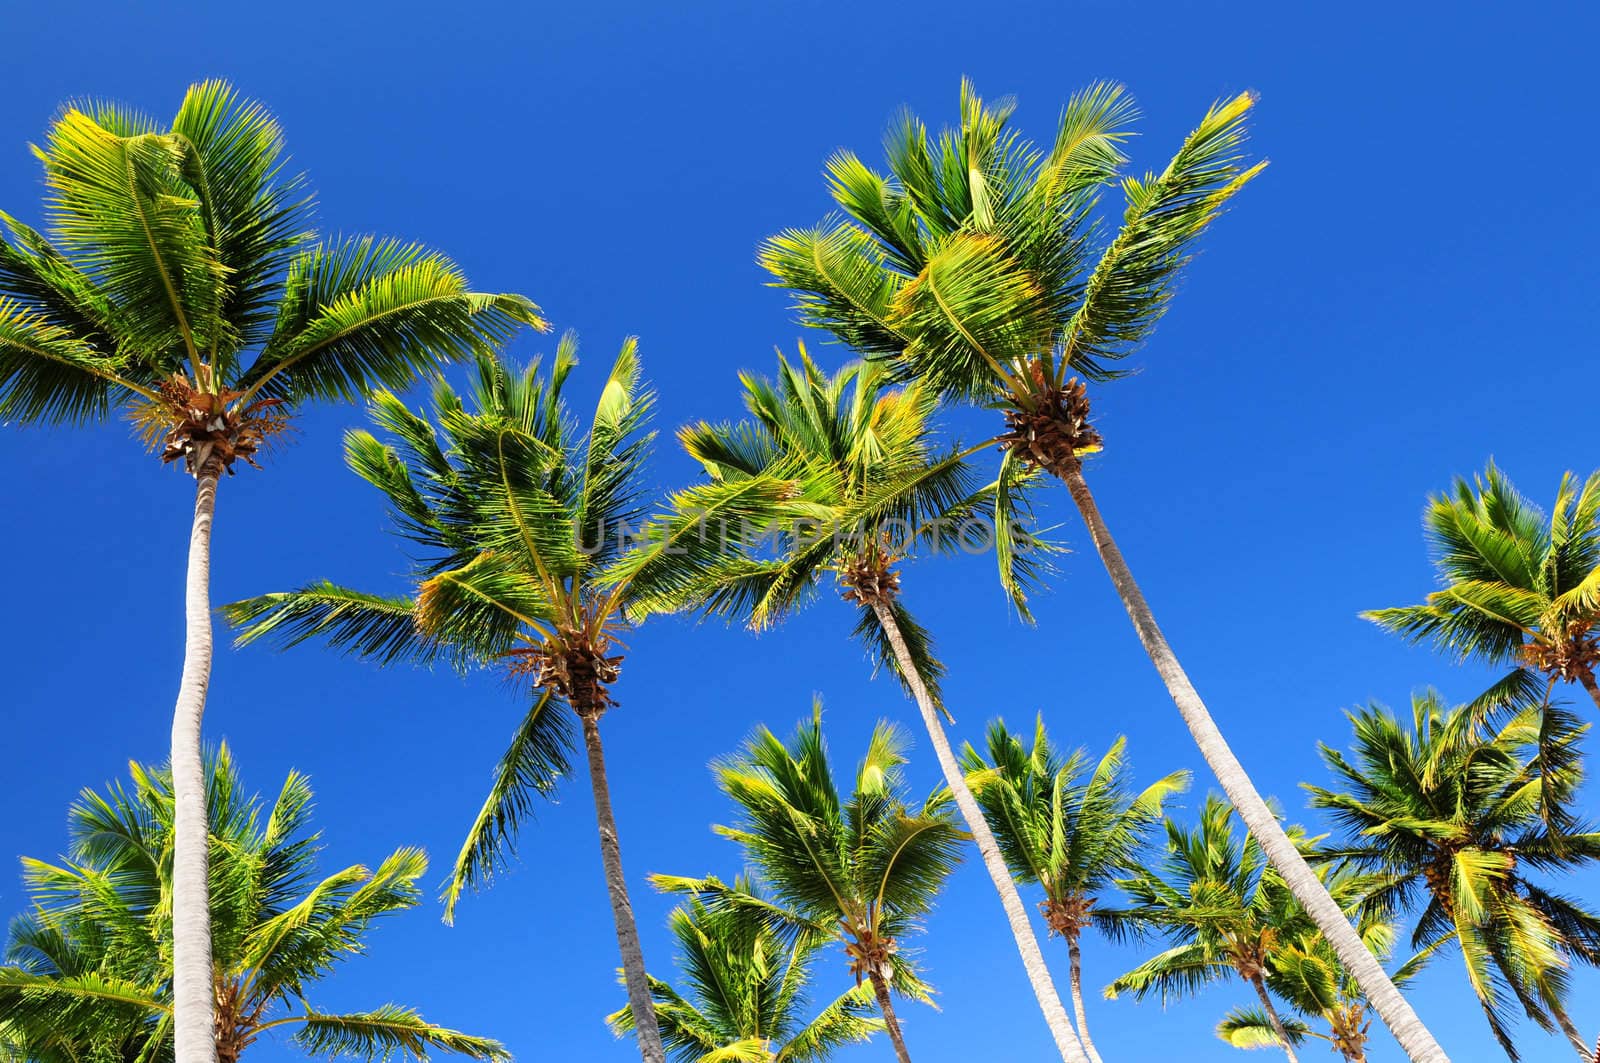 Palms on blue sky by elenathewise